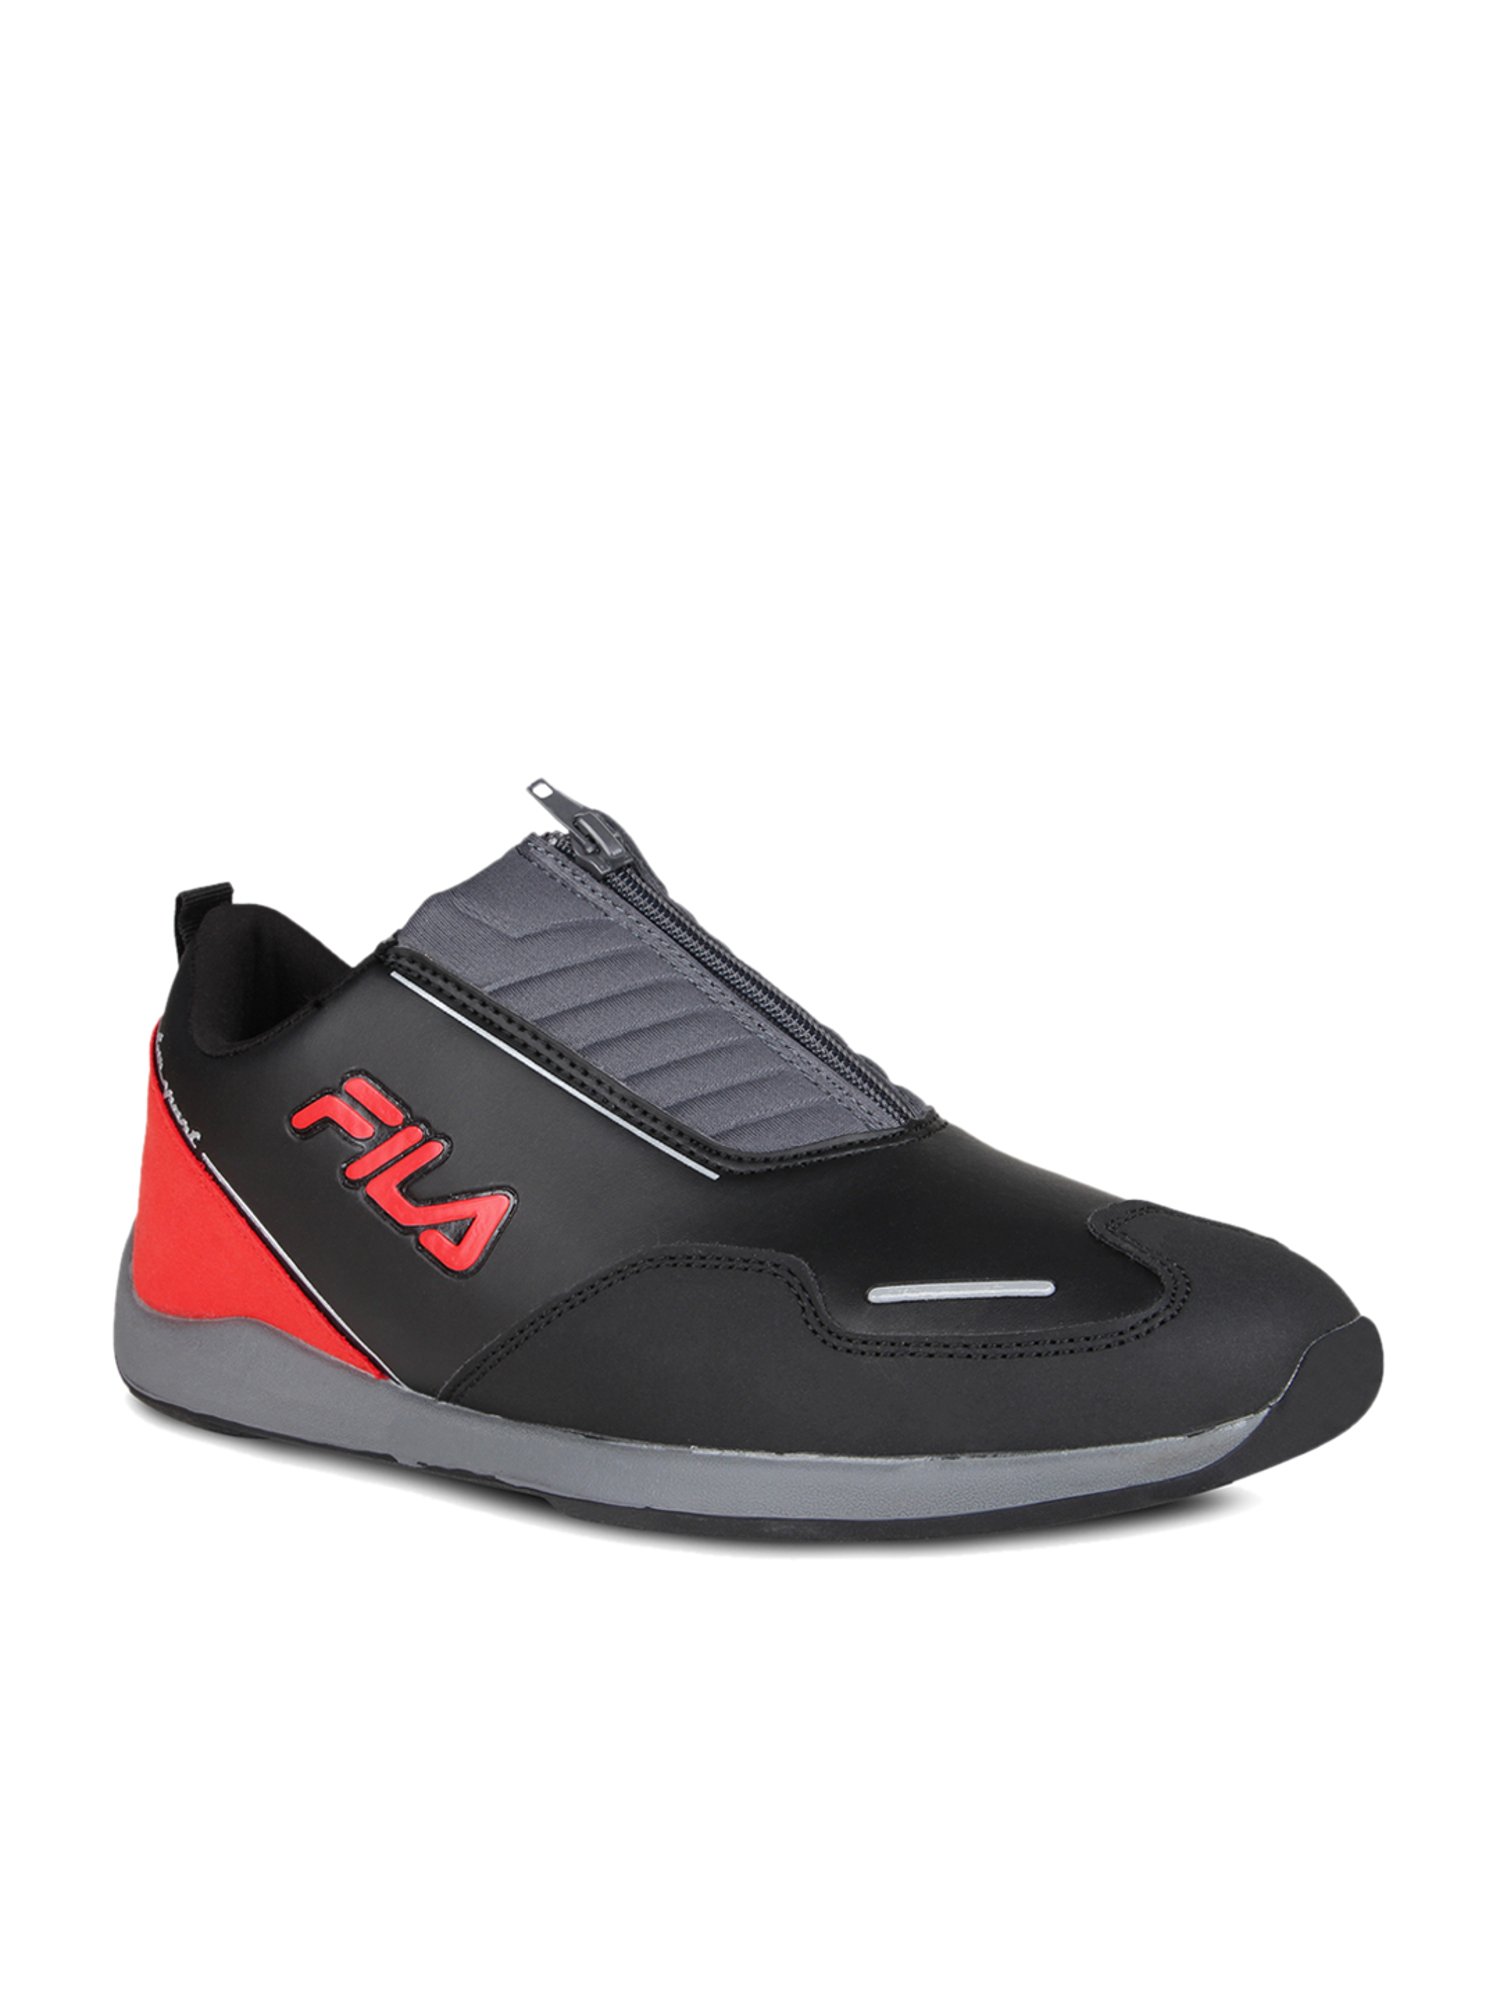 Fila Disruptor Tutta Black 2023 Man Men's Shoes Black Rubber 2023 | eBay